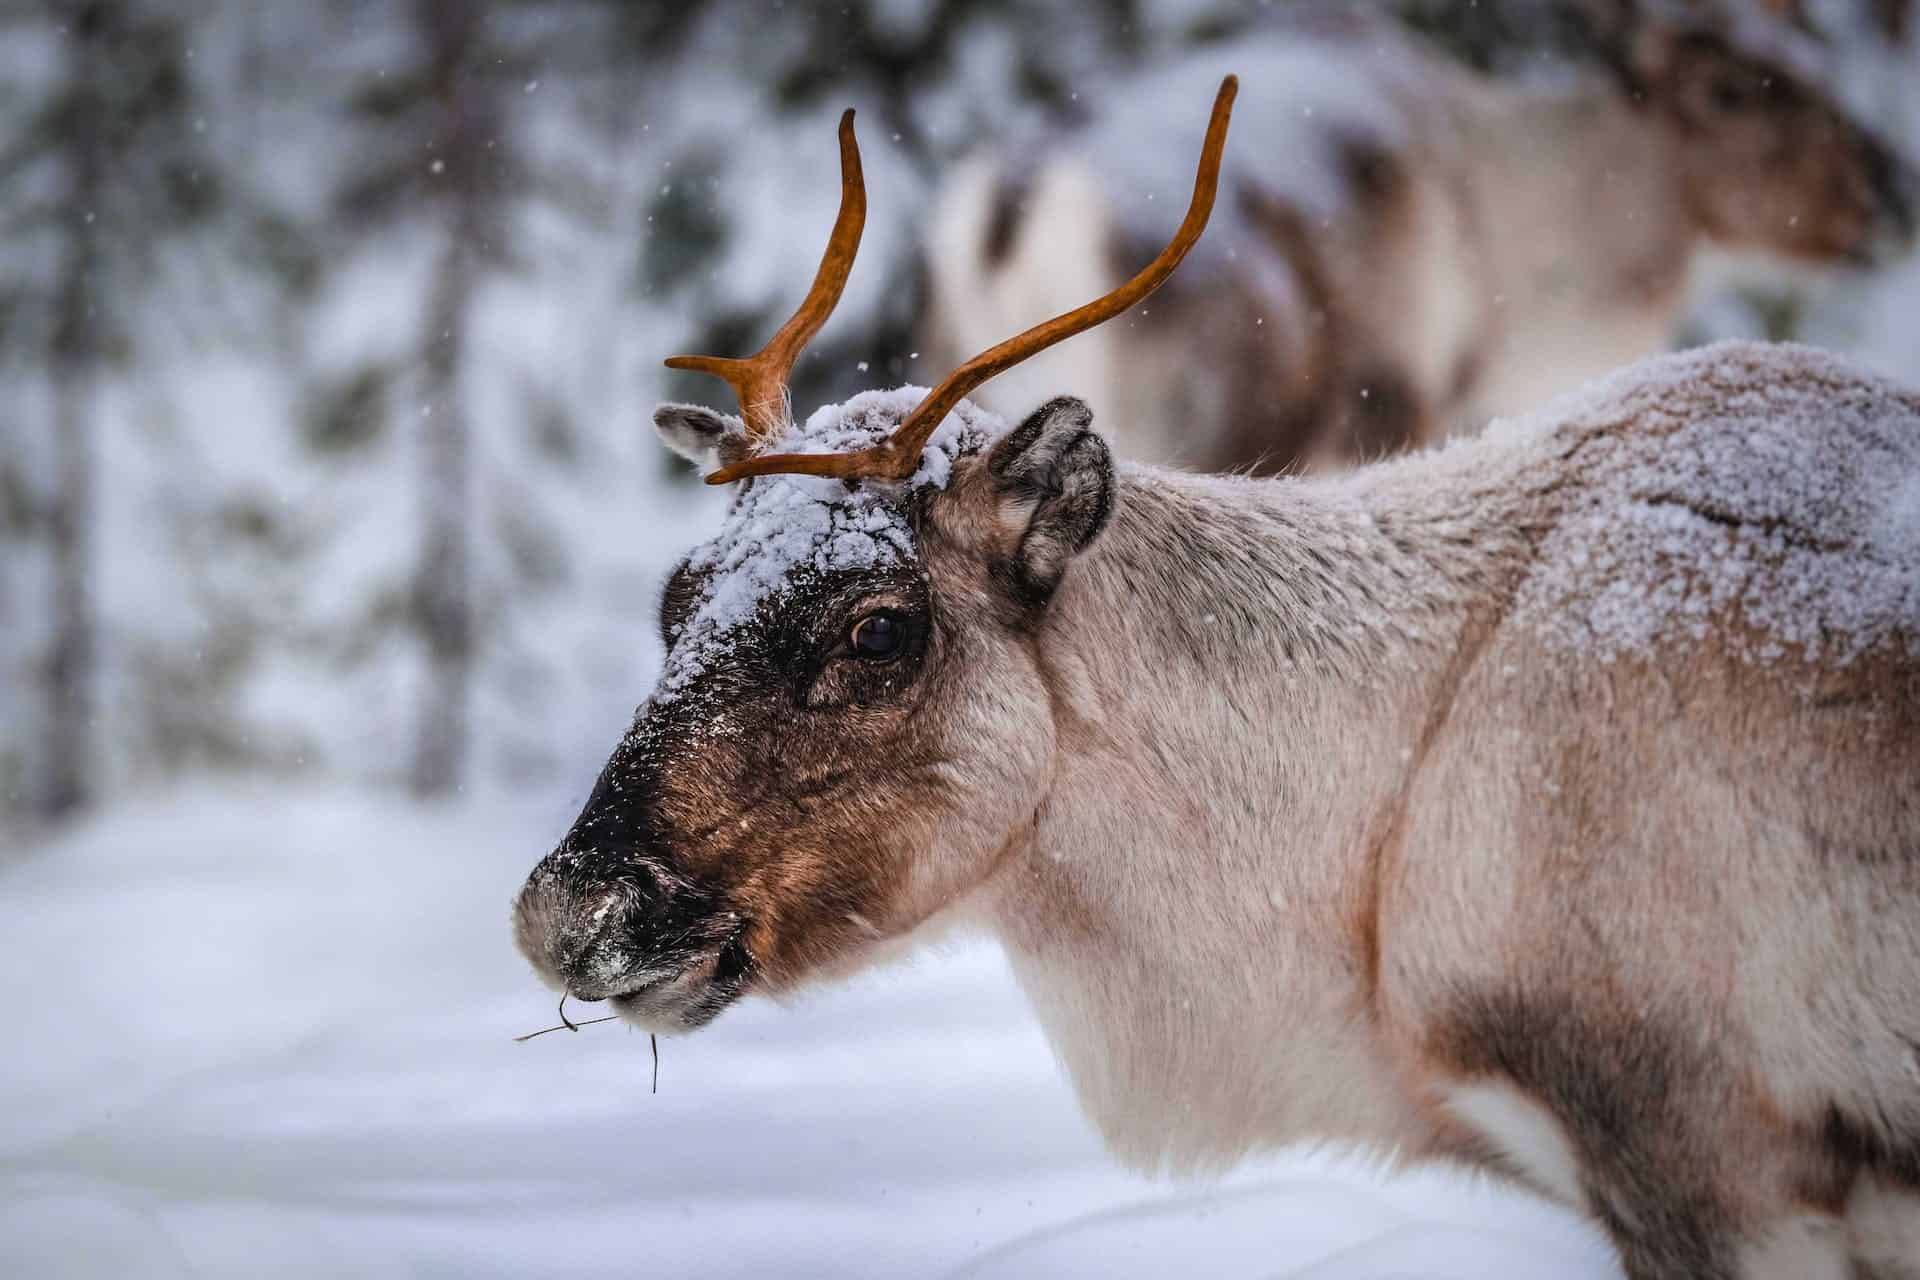 Reindeer Have A Secret Superpower That Helps Them Find Food The Dark Arctic Winter